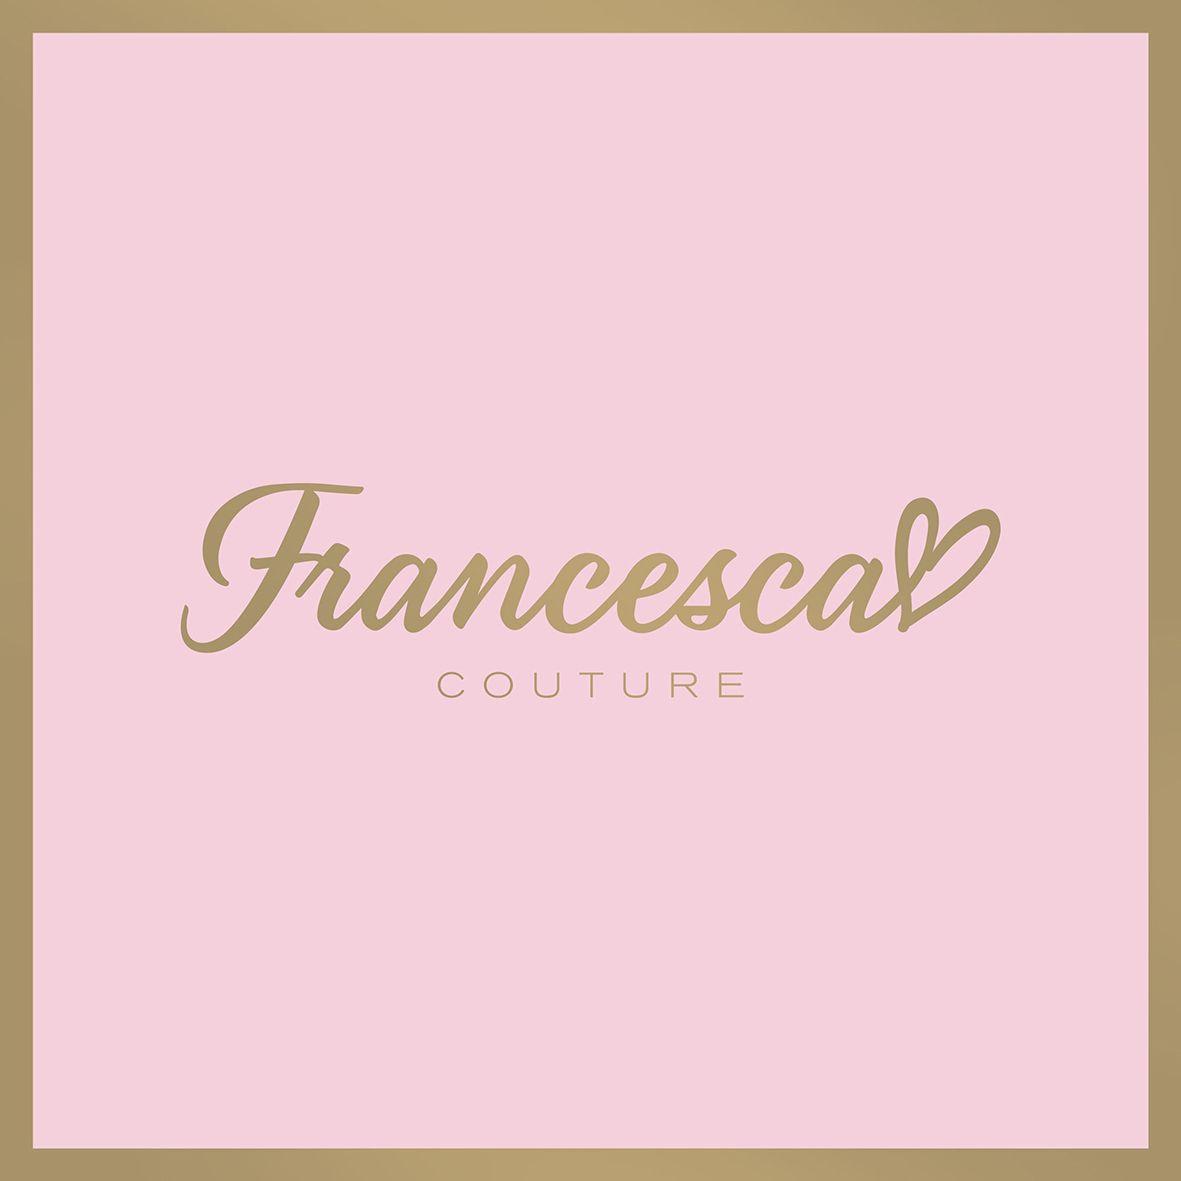 Francescas Logo - Francesca Couture. Made with Love